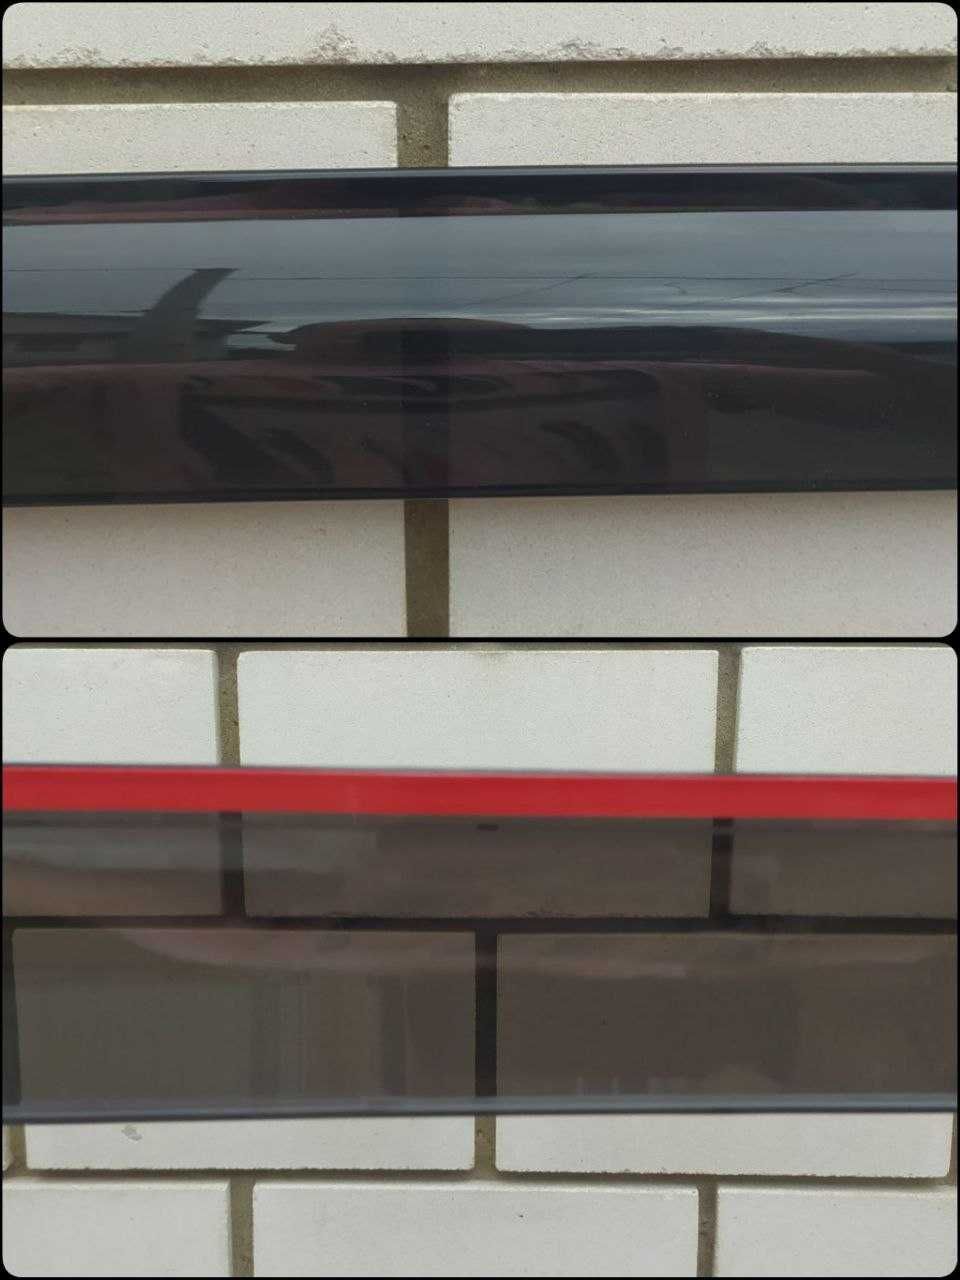 Дефлектори Ветровики на окна Nissan Leaf 2010-2017 Ниссан Лиф 2017+